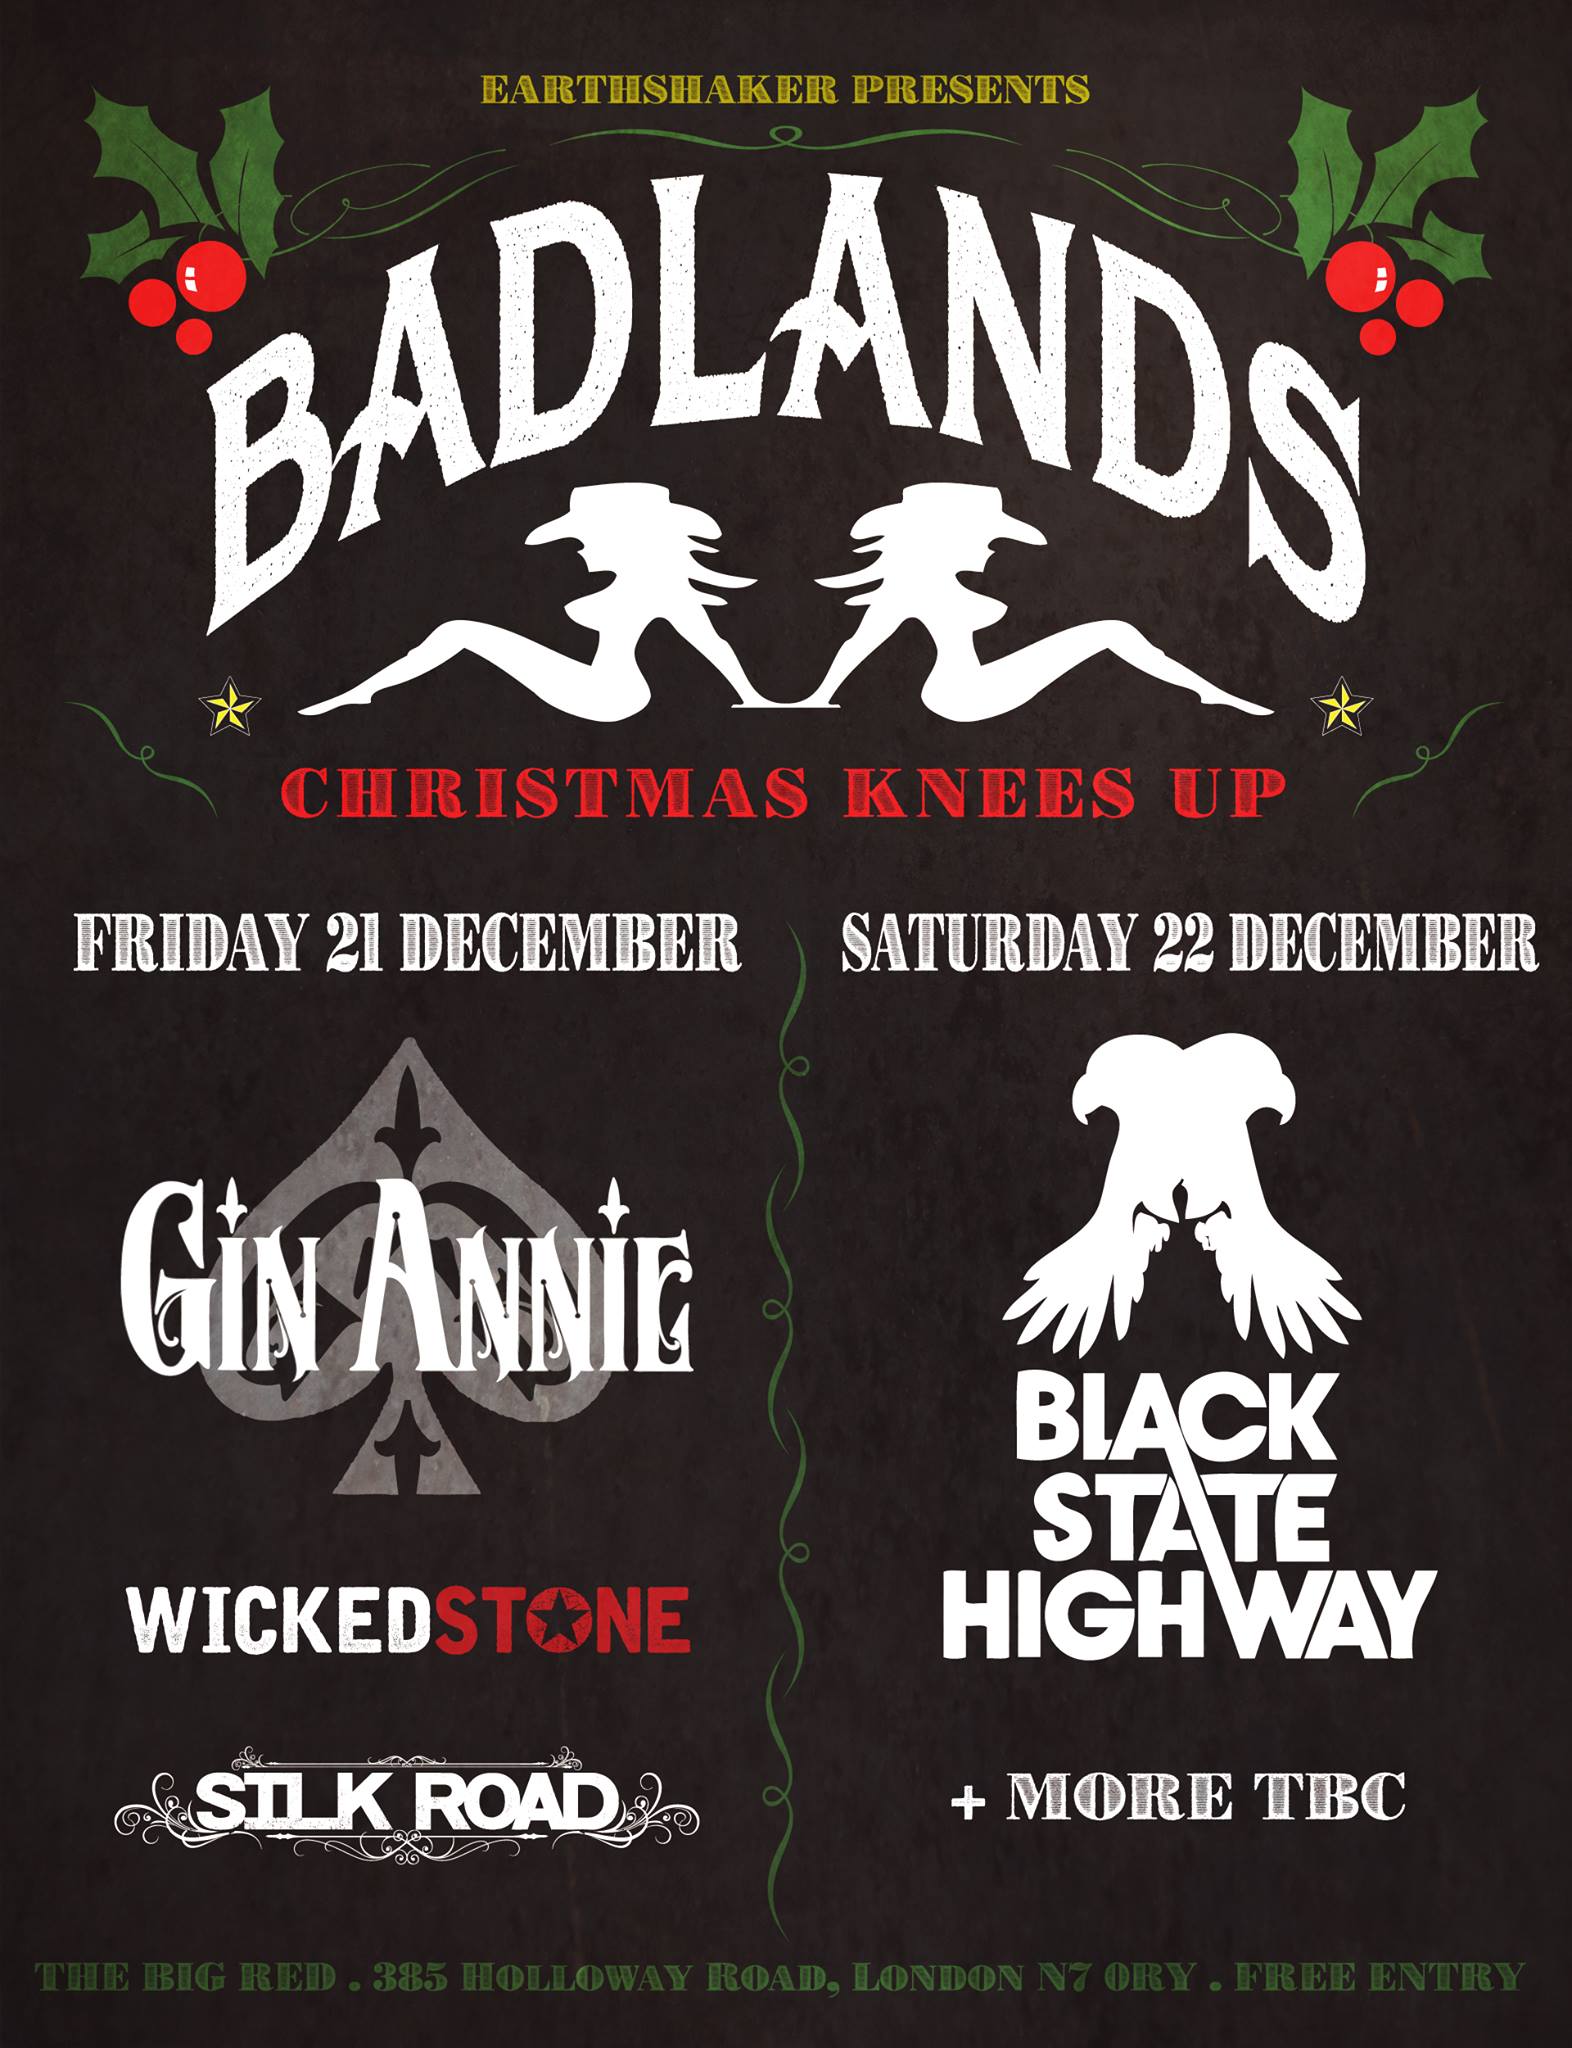 Big Red N Logo - Badlands Christmas knees up nights of pure rock n' roll! @